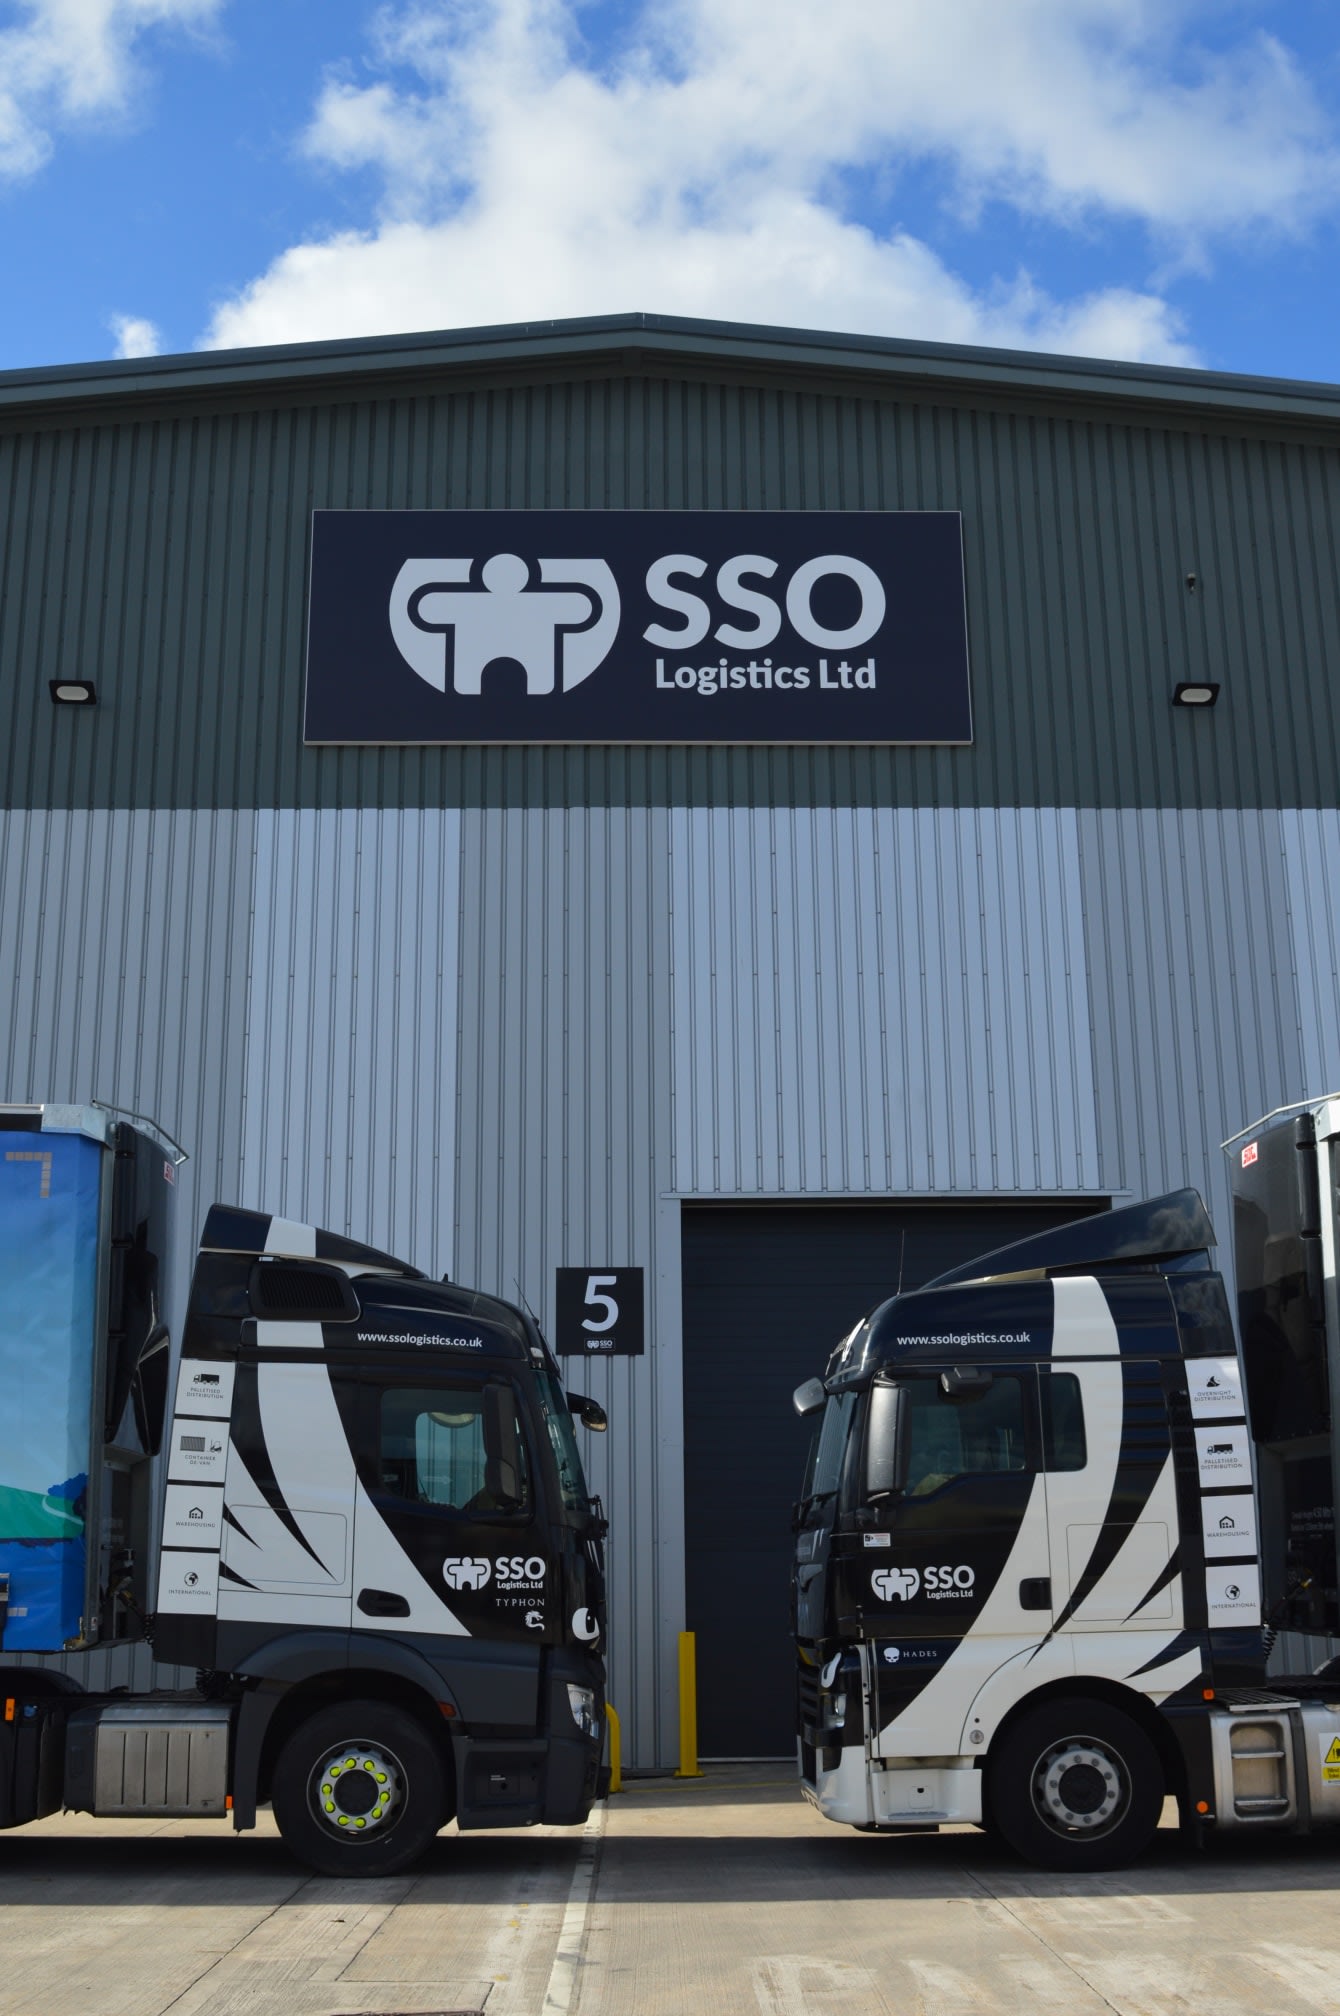 SSO Logistics Ltd St. Helens 01744 416999